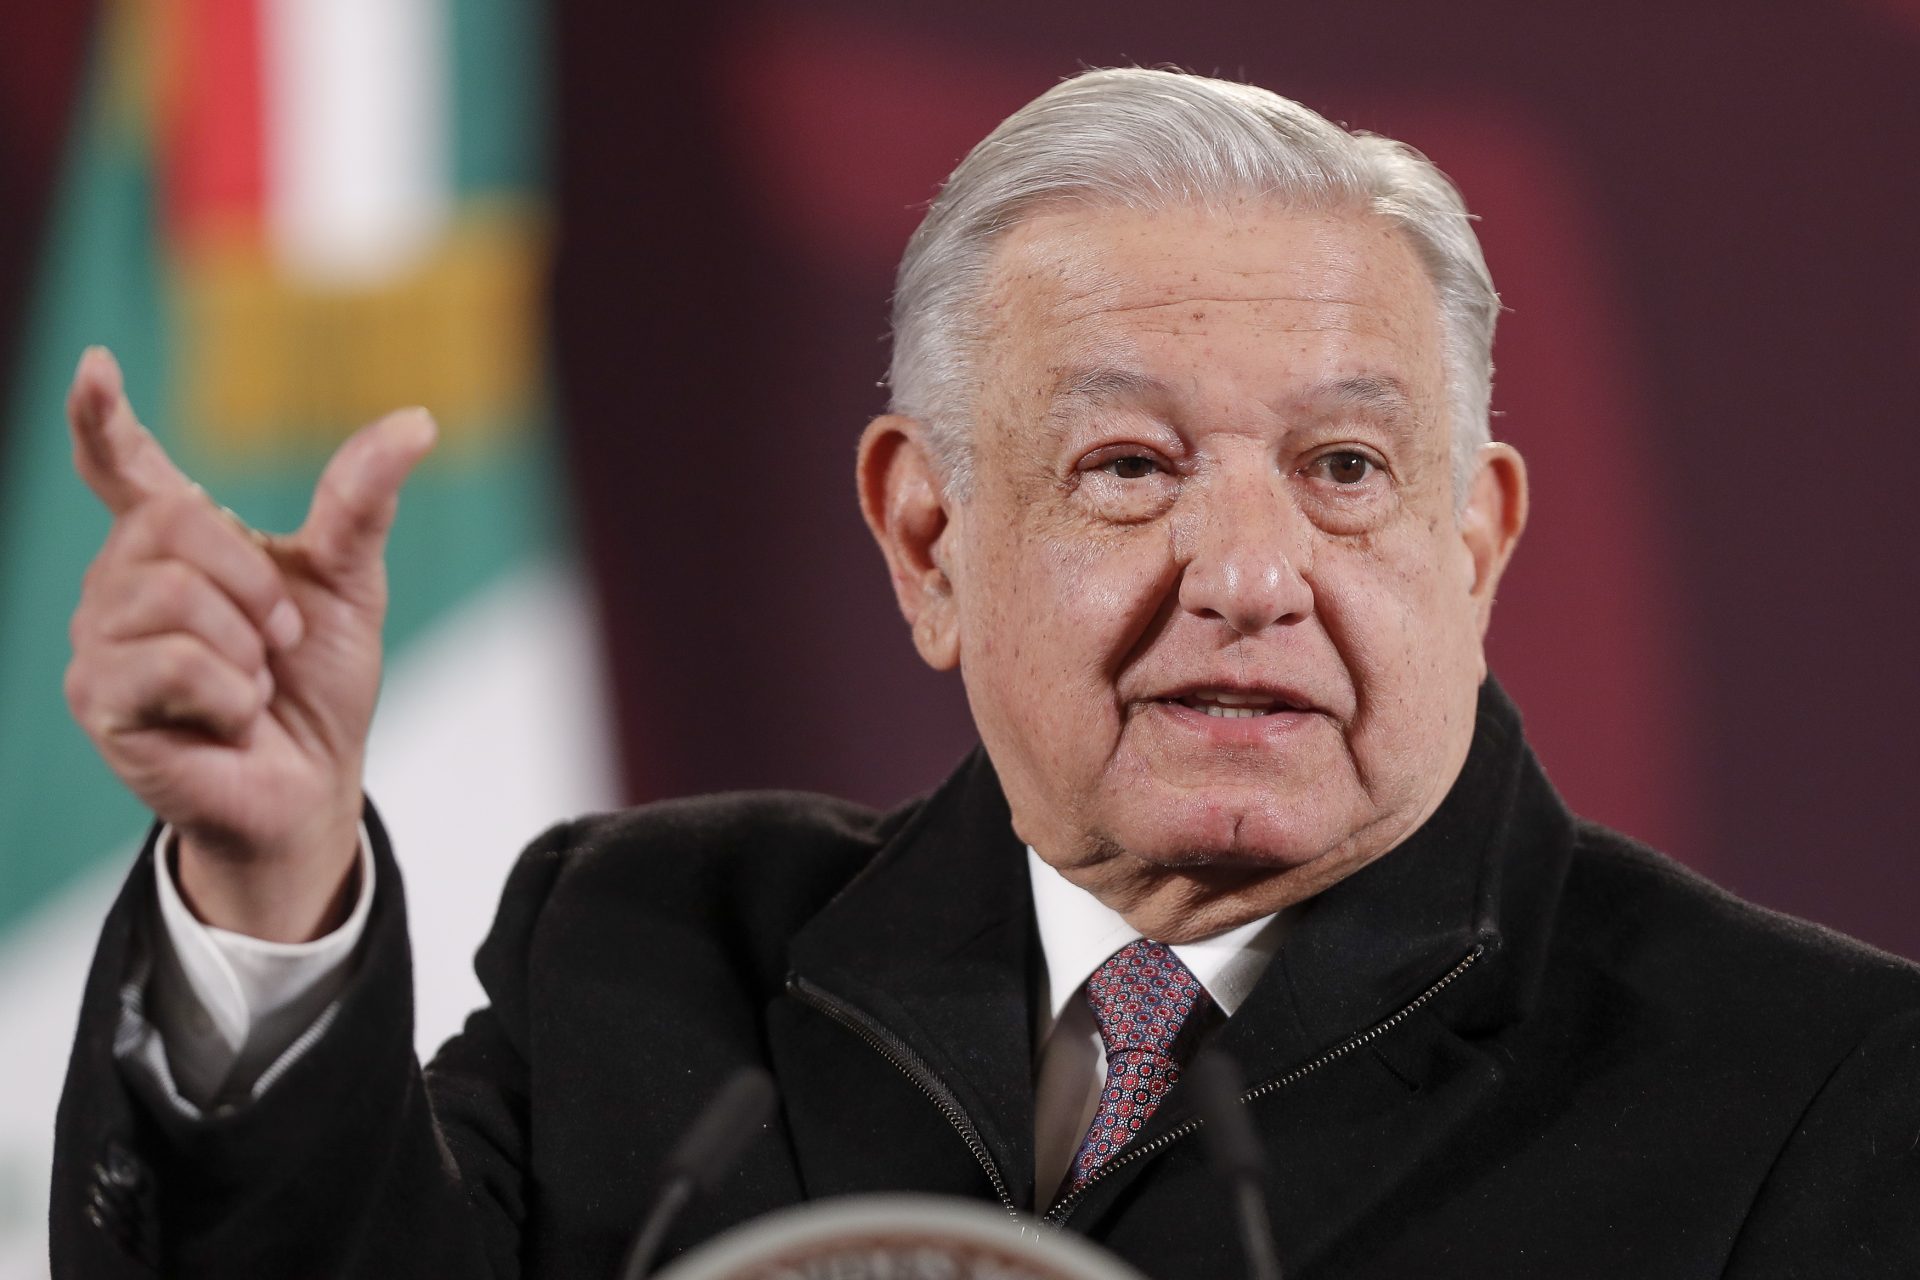 Lopez Obrador asks the United States not to use Mexico as a “piñata”